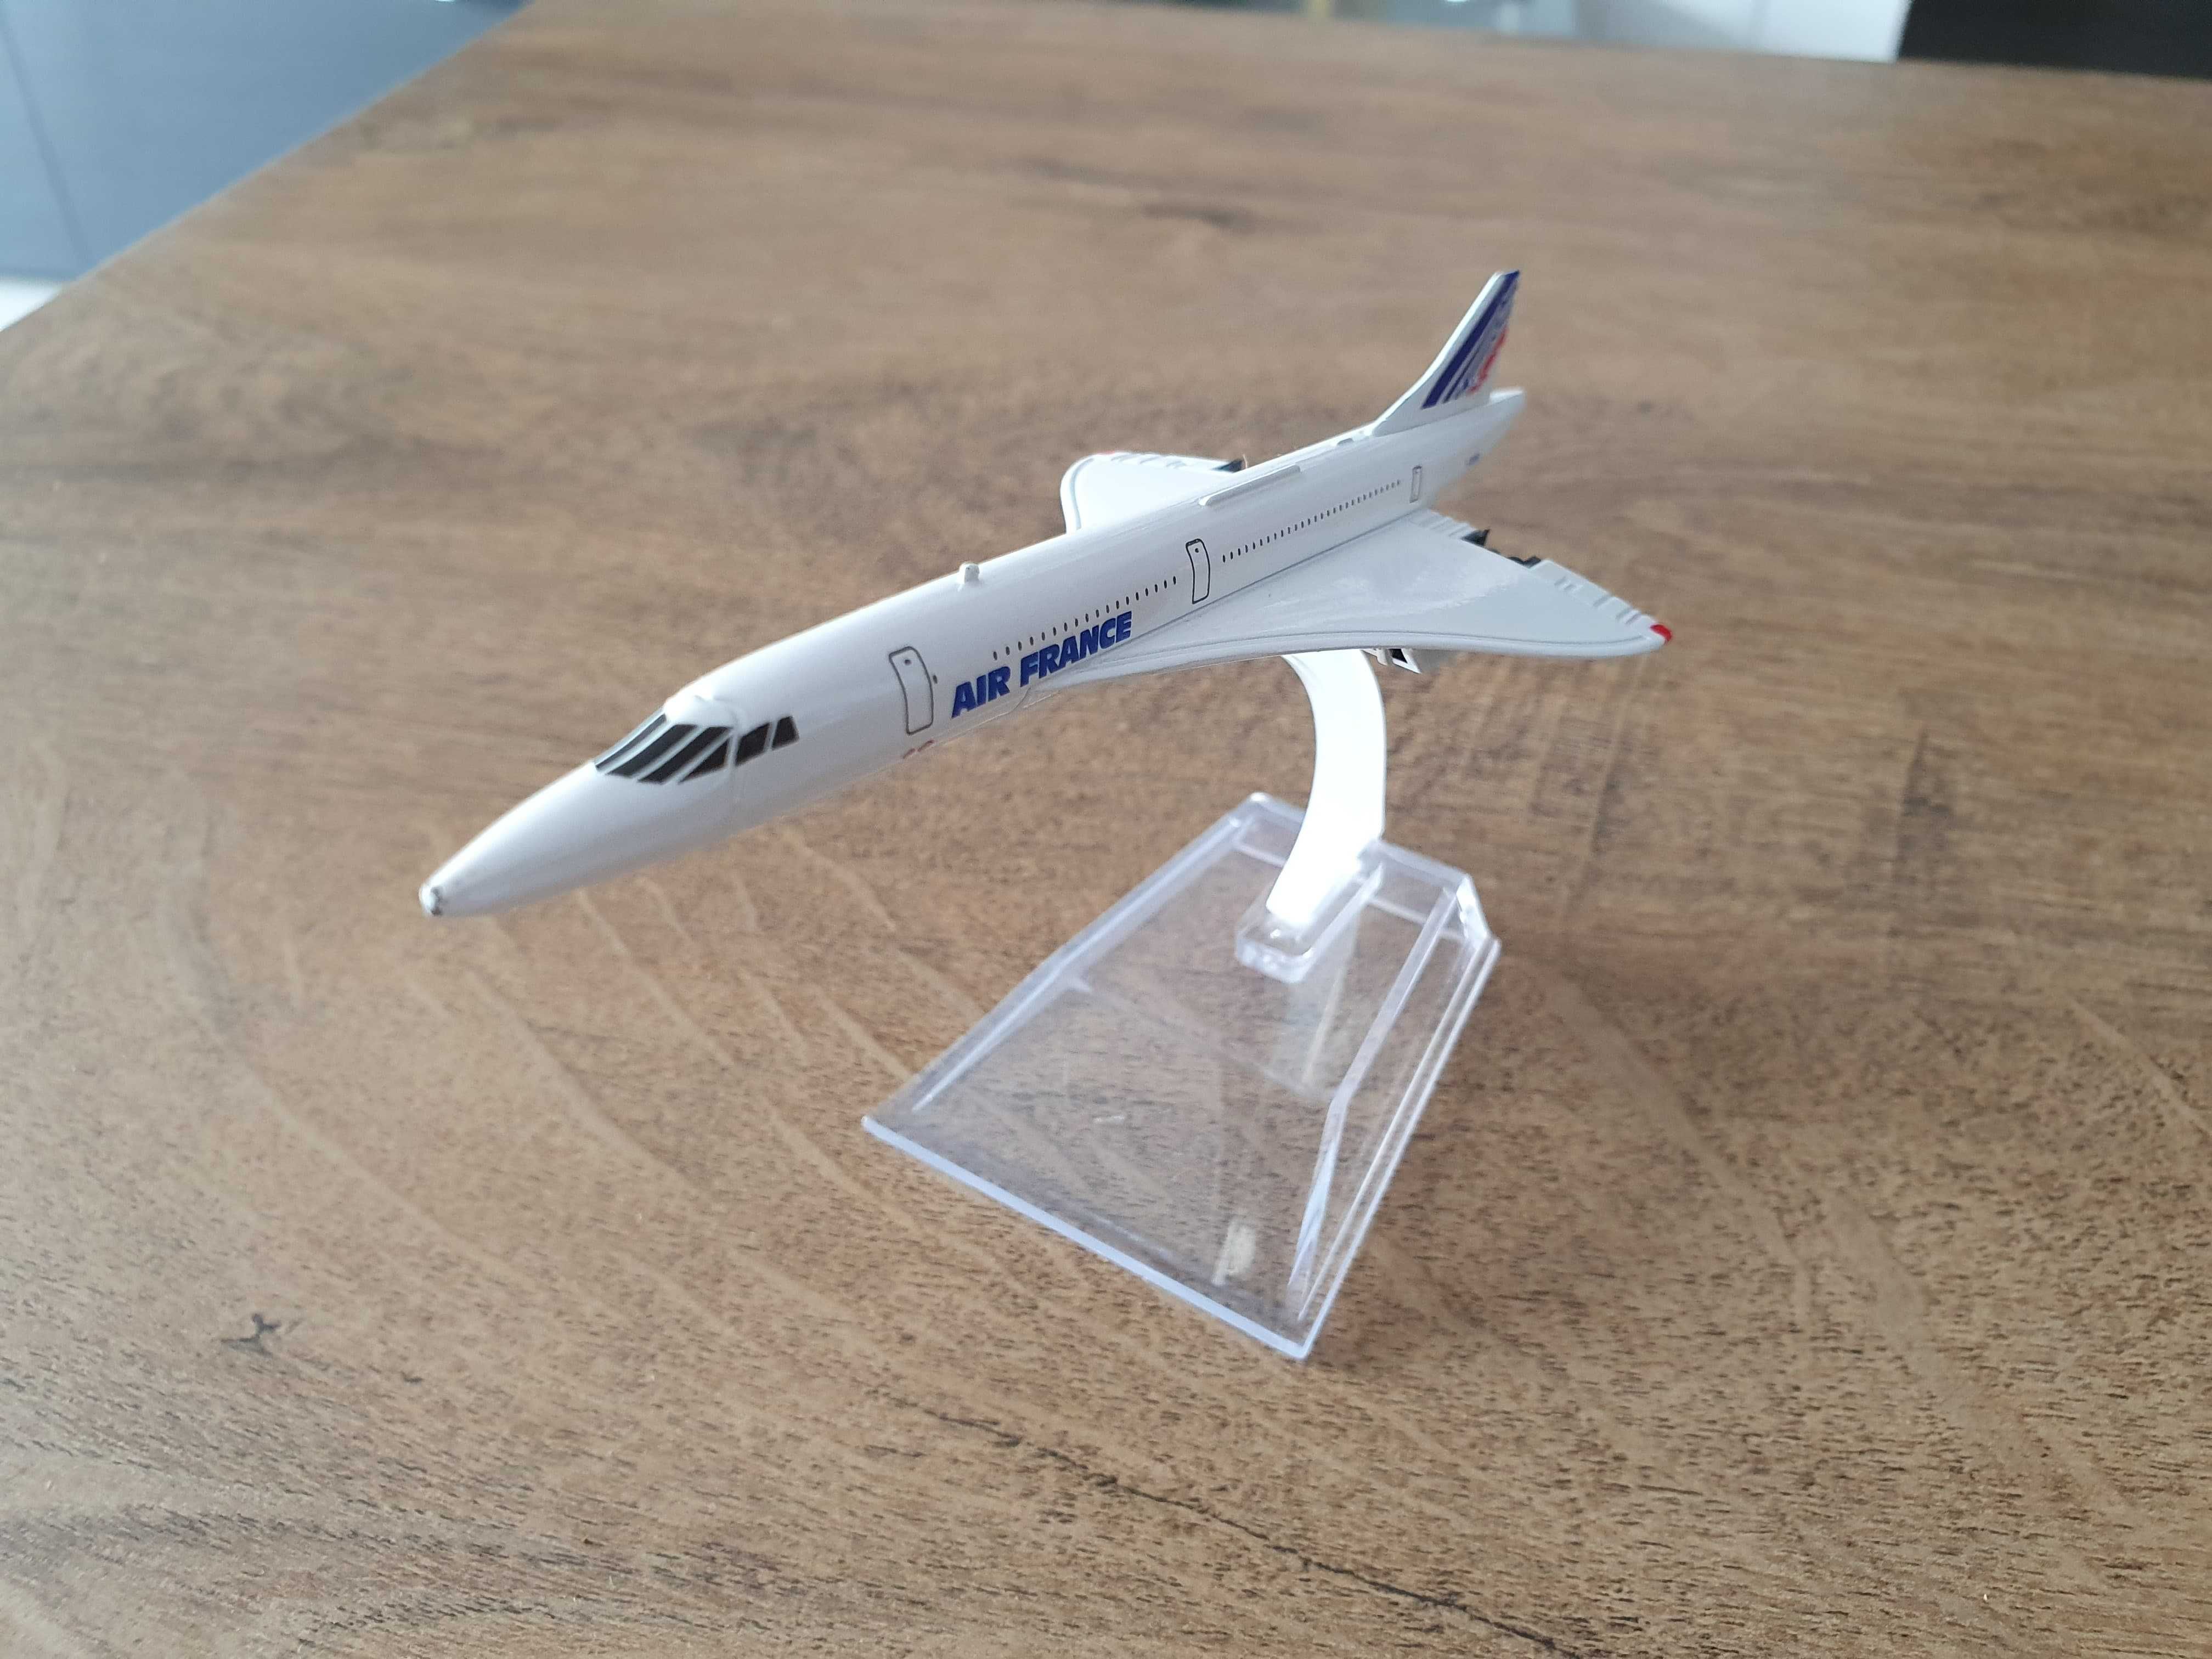 Macheta metalica de avion Air France Concorde | Decoratie